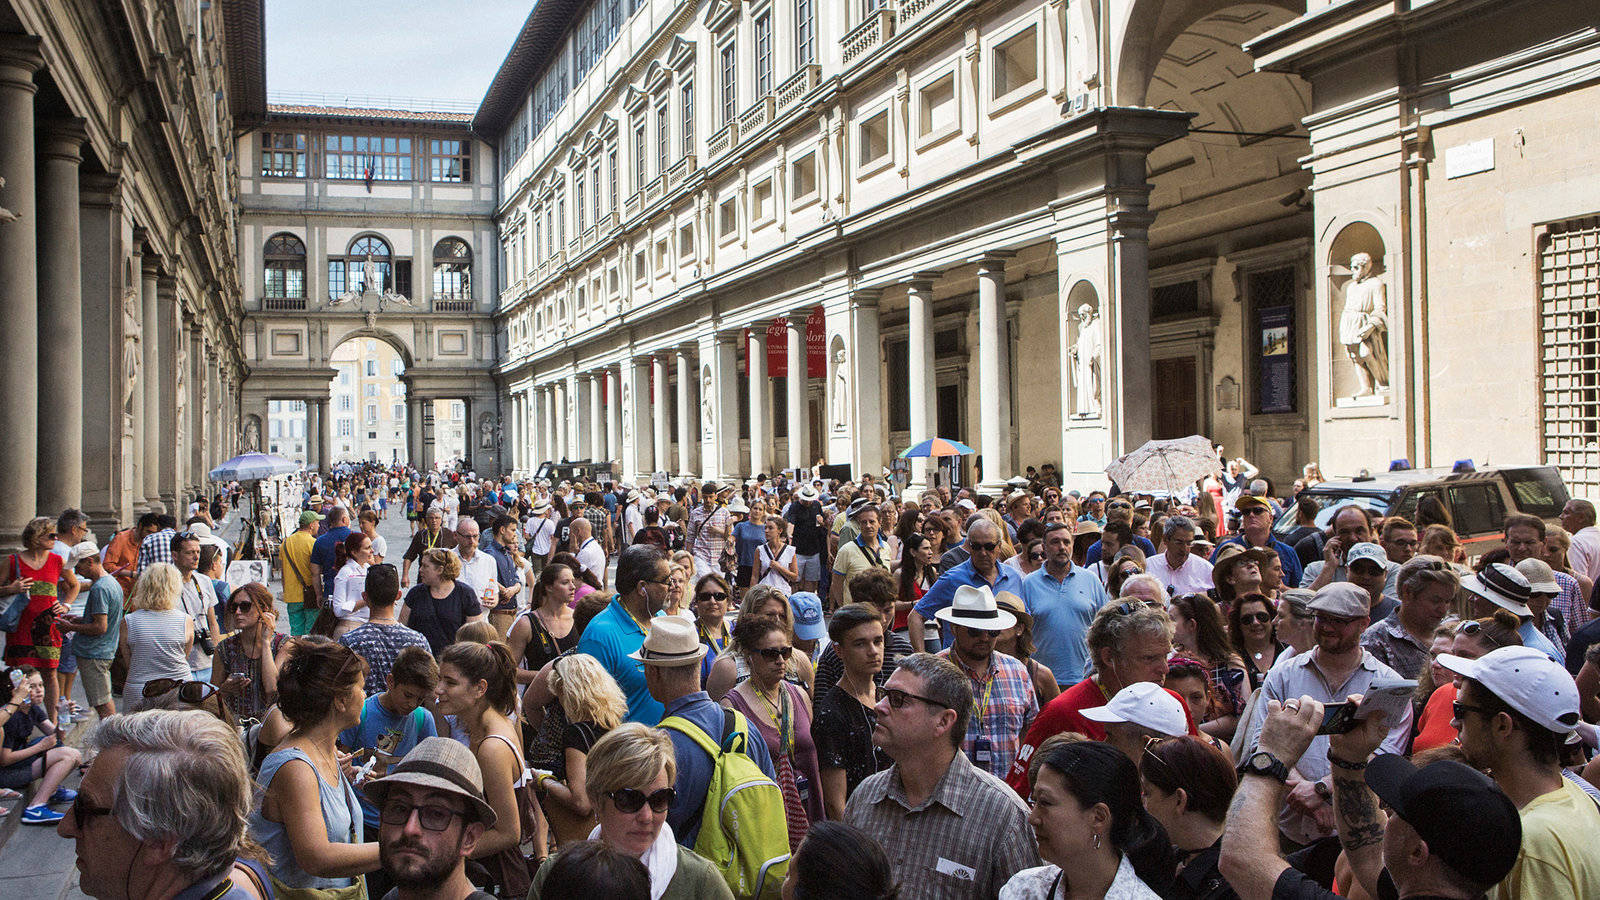 Uffizi Gallery Facade Tourist Crowd Background